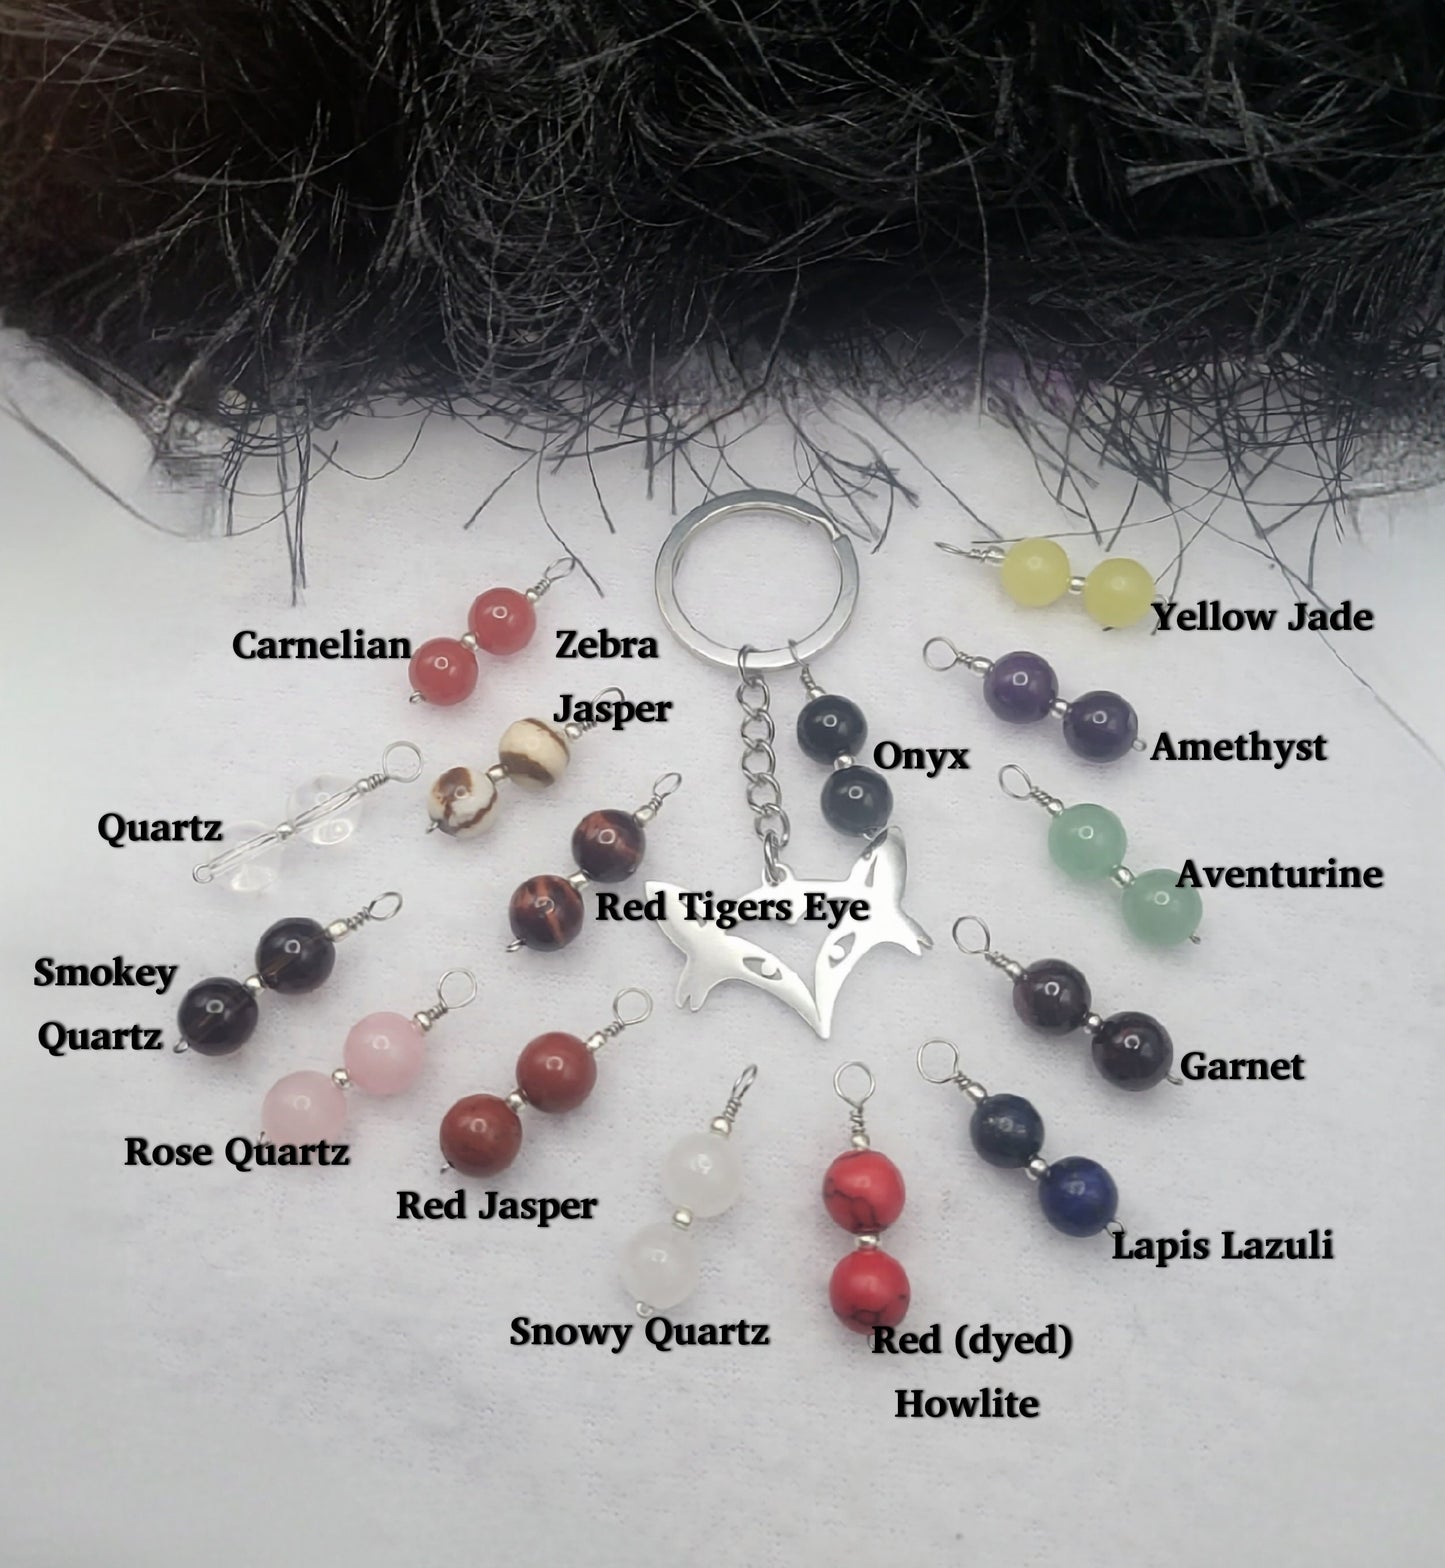 Stainless Steel Hotwife Vixen Keychain with Genuine Gemstone Beads